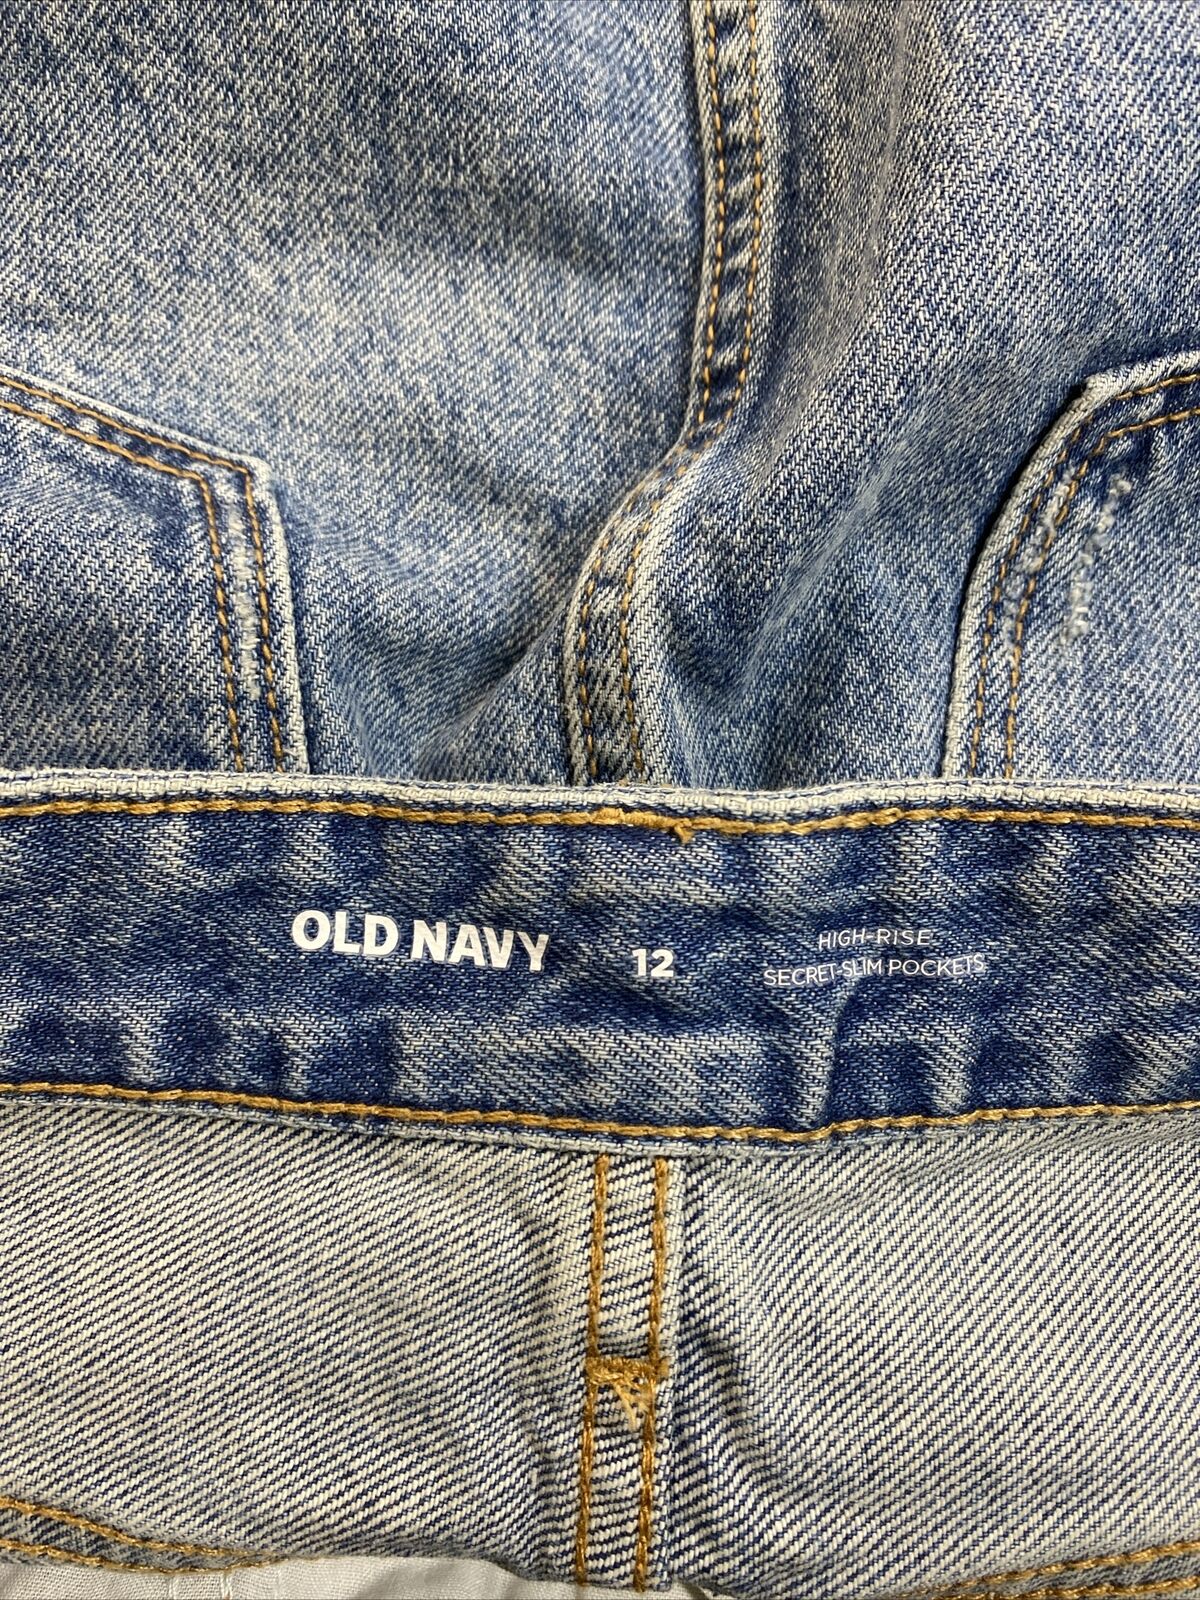 NEW Old Navy Women's Light Wash High Rise Button Fly Denim Skirt - 12